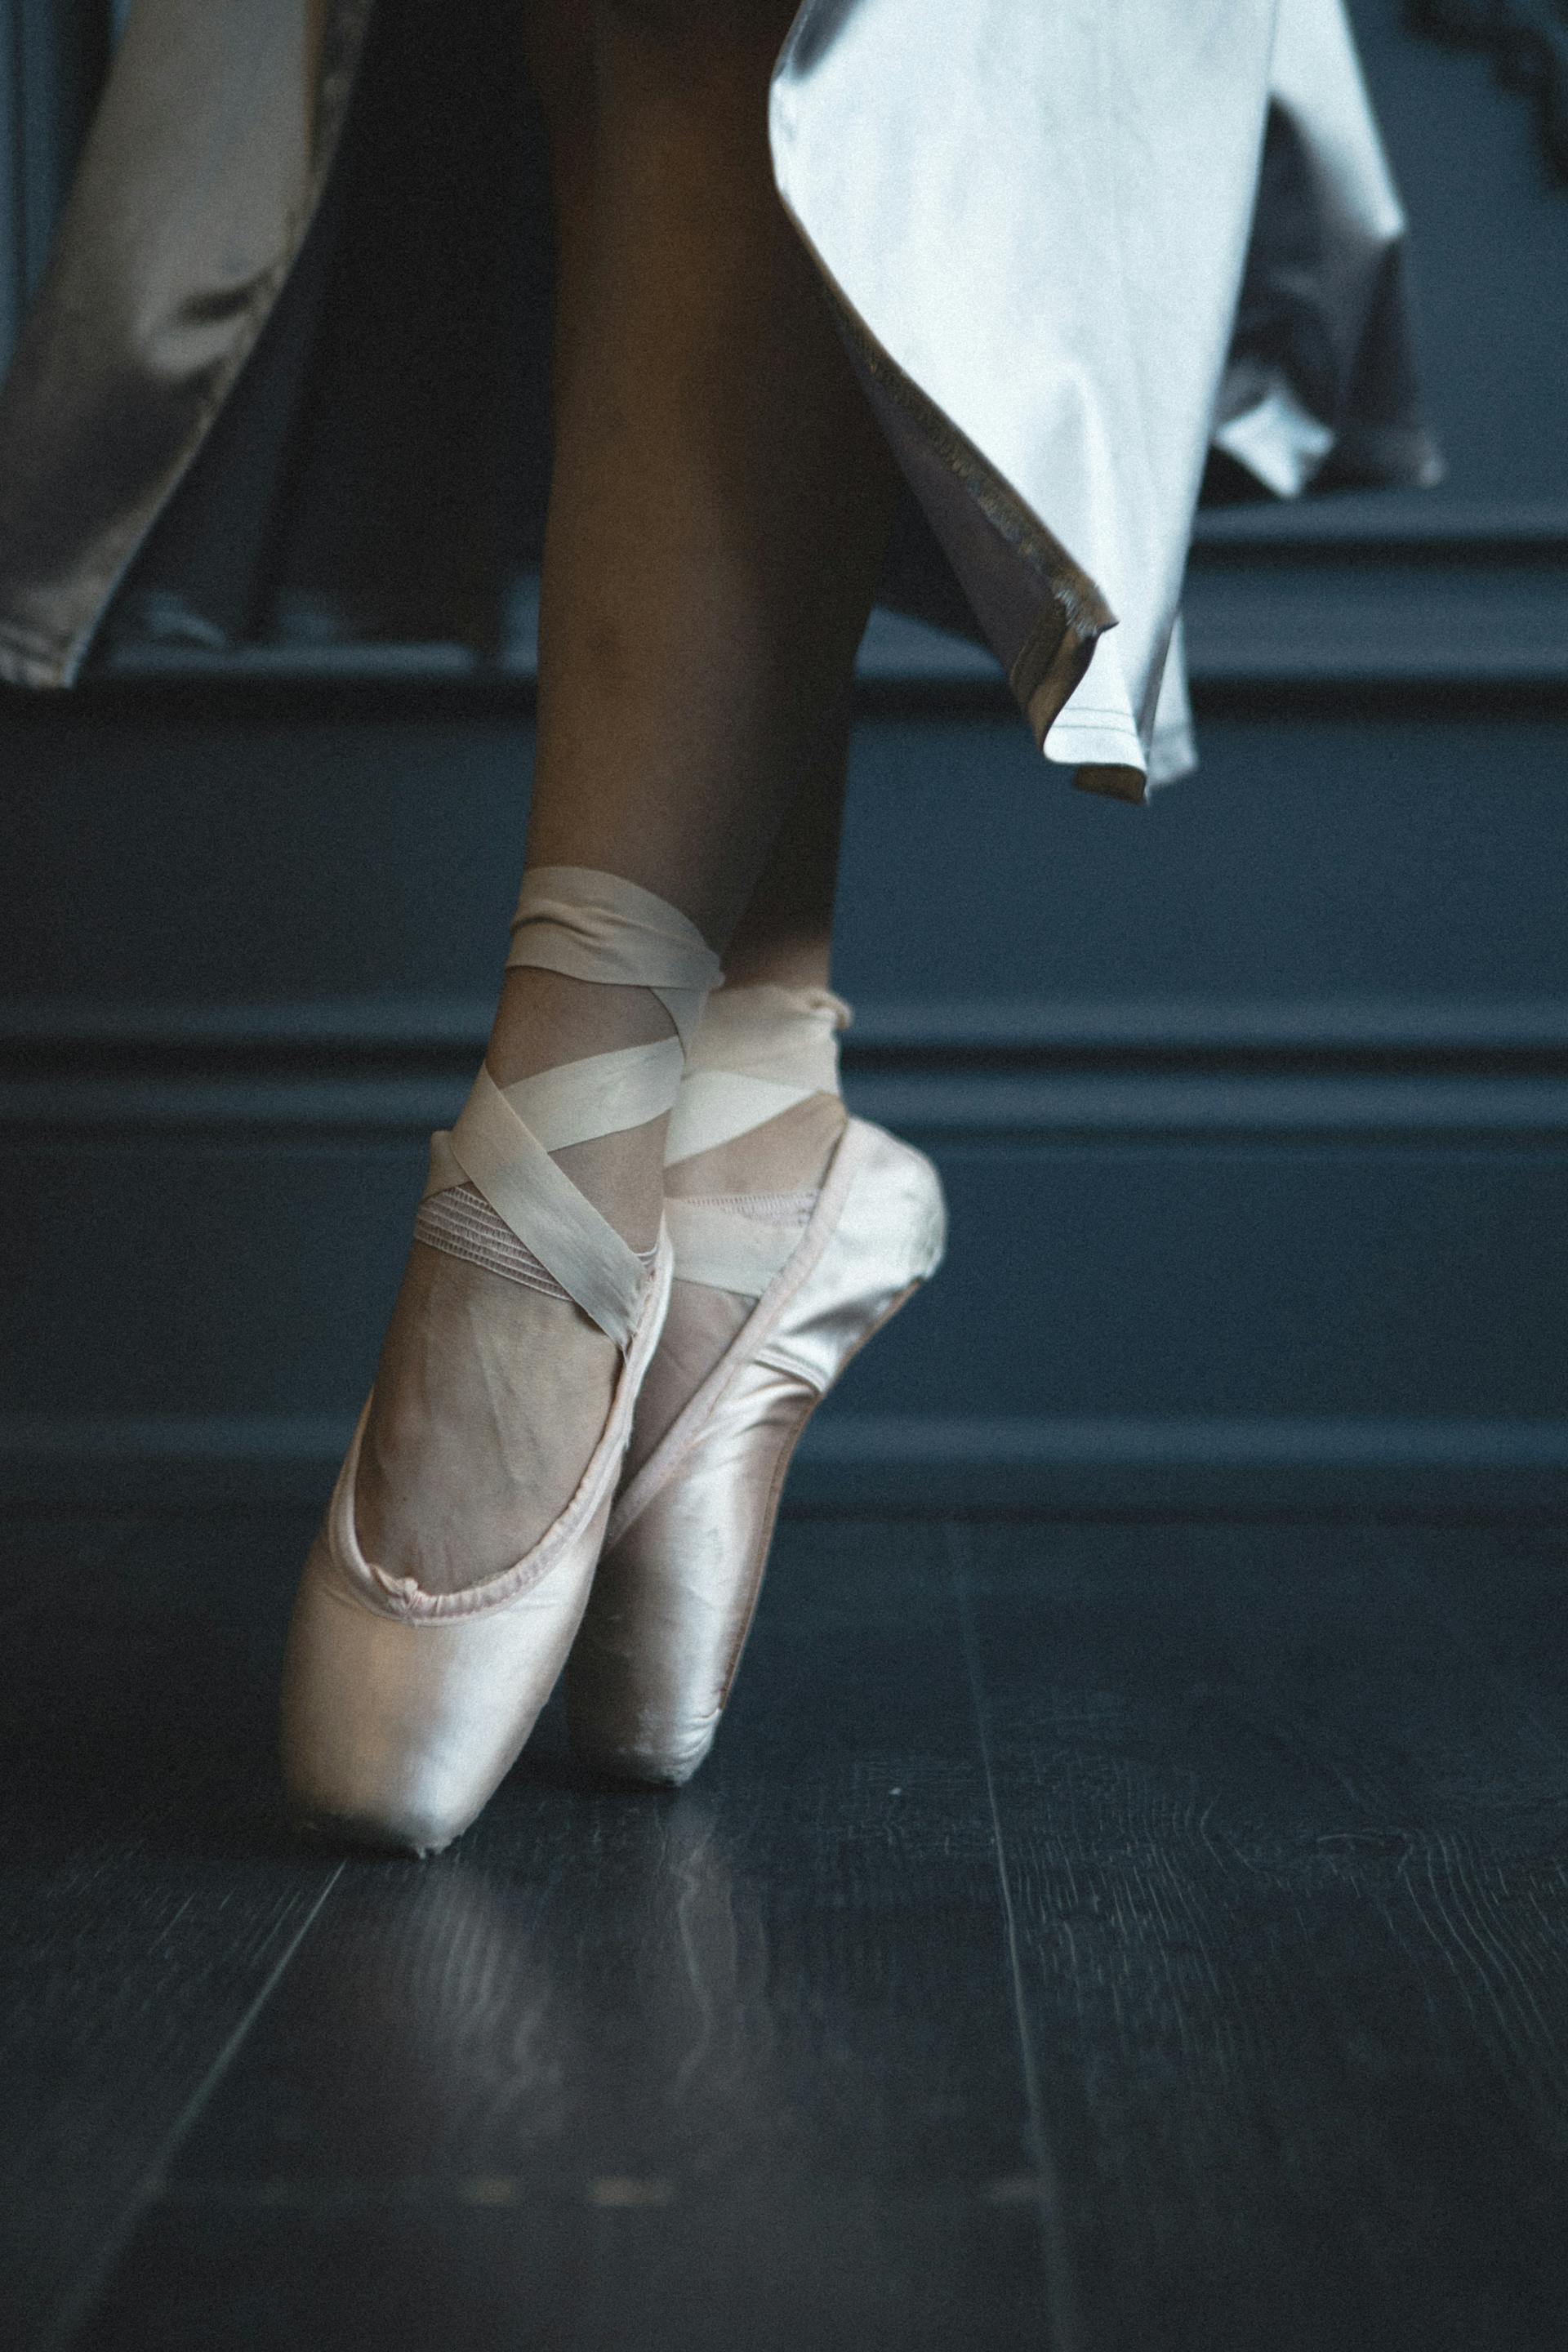 A woman wearing ballet shoes | Source: Pexels